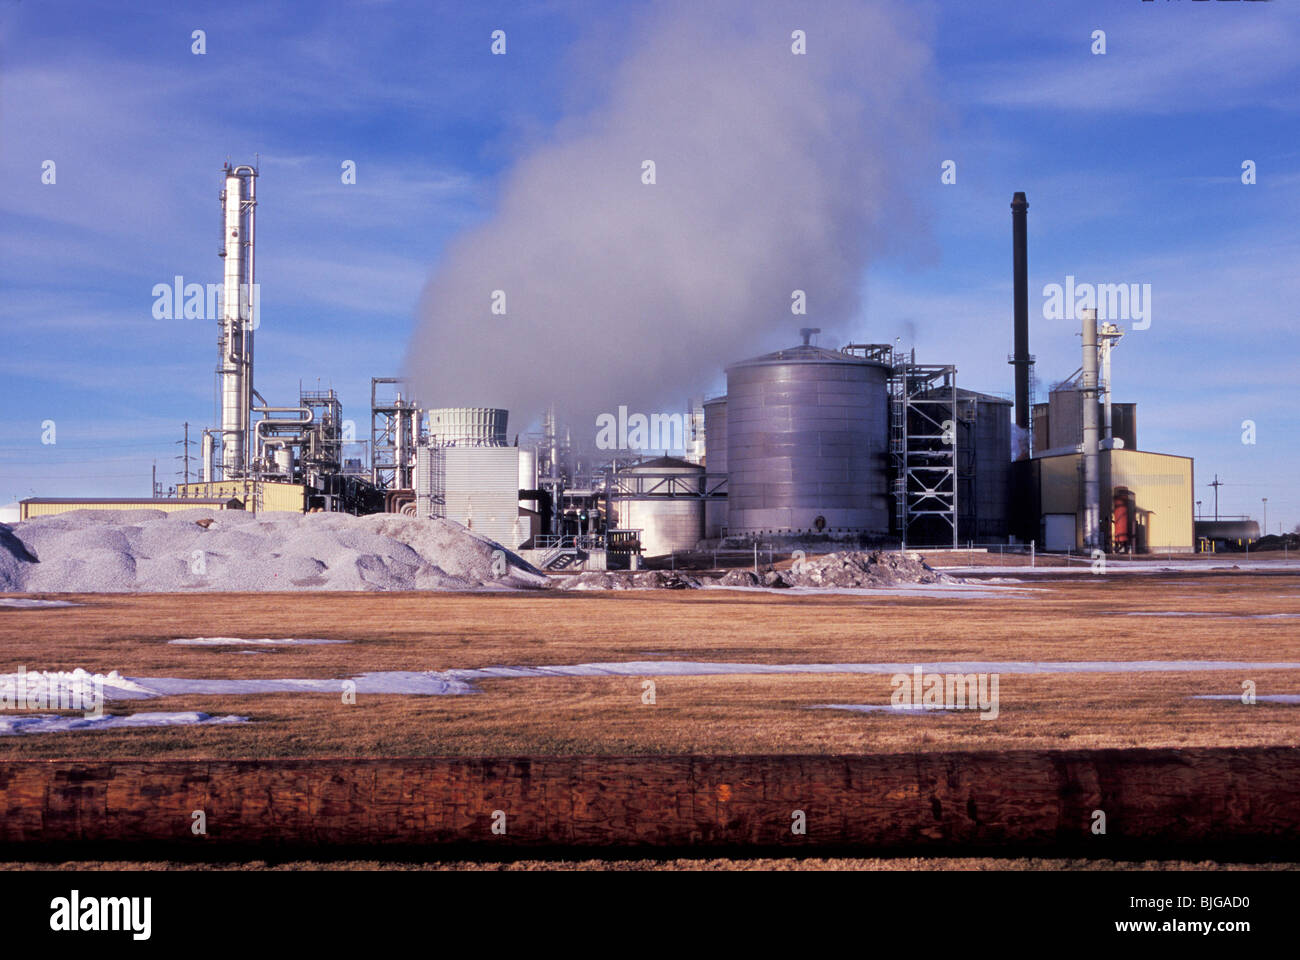 The Chief Ethanol Fuels ethanol distillery in Hastings, Nebraska, USA. Shot on Velvia film. Stock Photo